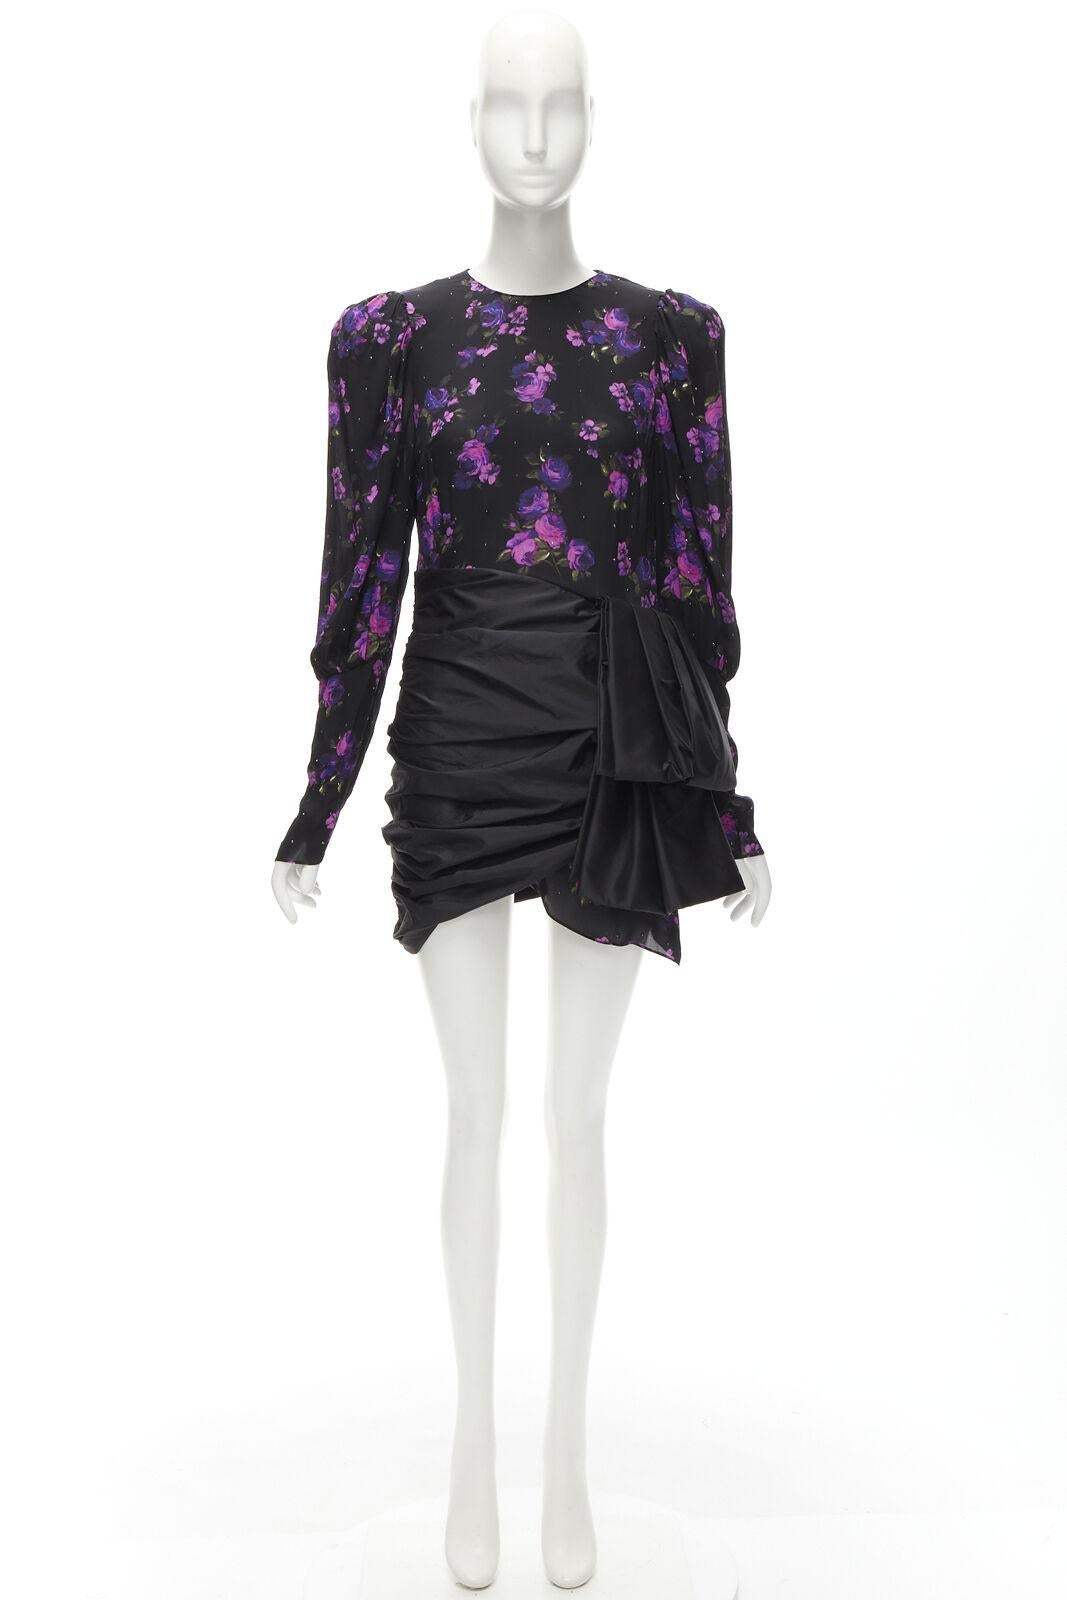 MAGDA BUTRYM Matera crystal embellished purple floral wrap skirt dress FR34 XS For Sale 5